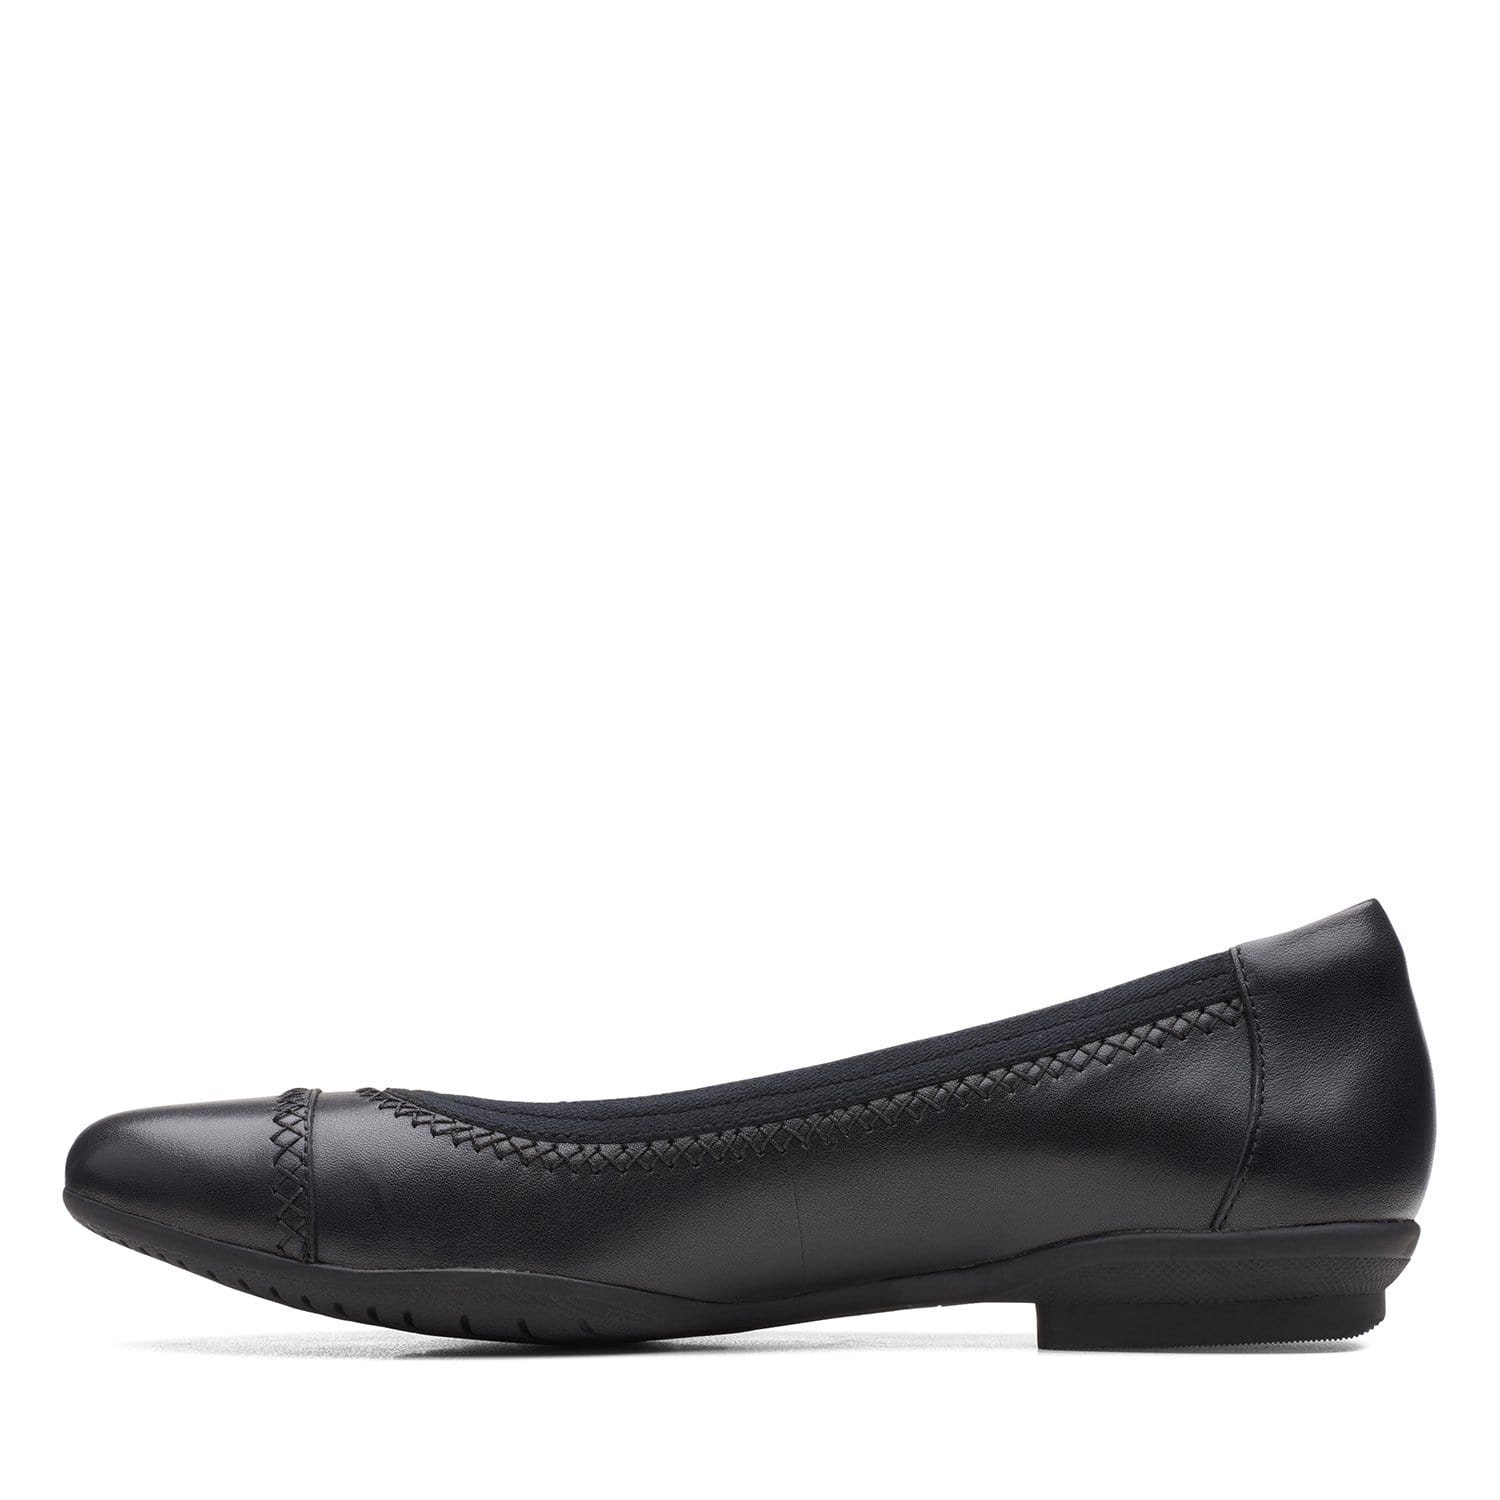 Clarks Sara Bay - Shoes - Black Leather - 261634014 - D Width (Standard Fit)